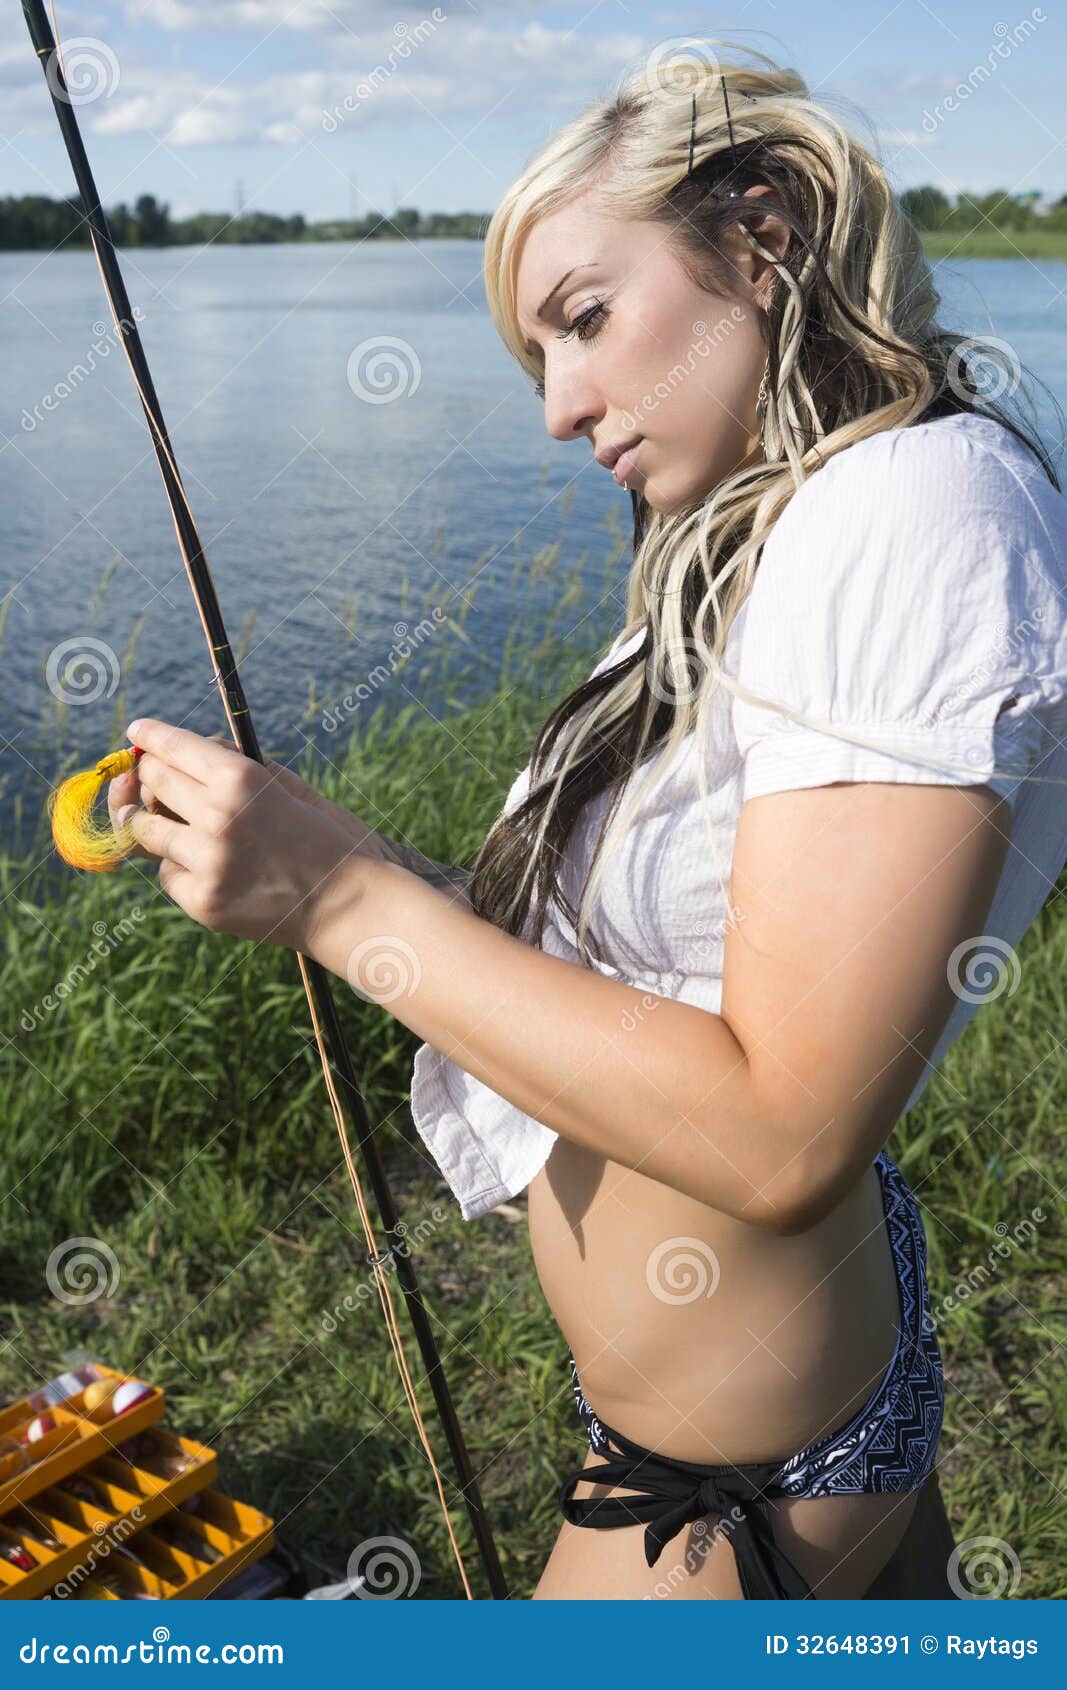 Fly fishing stock image. Image of lady, bikini, equipment - 32648391